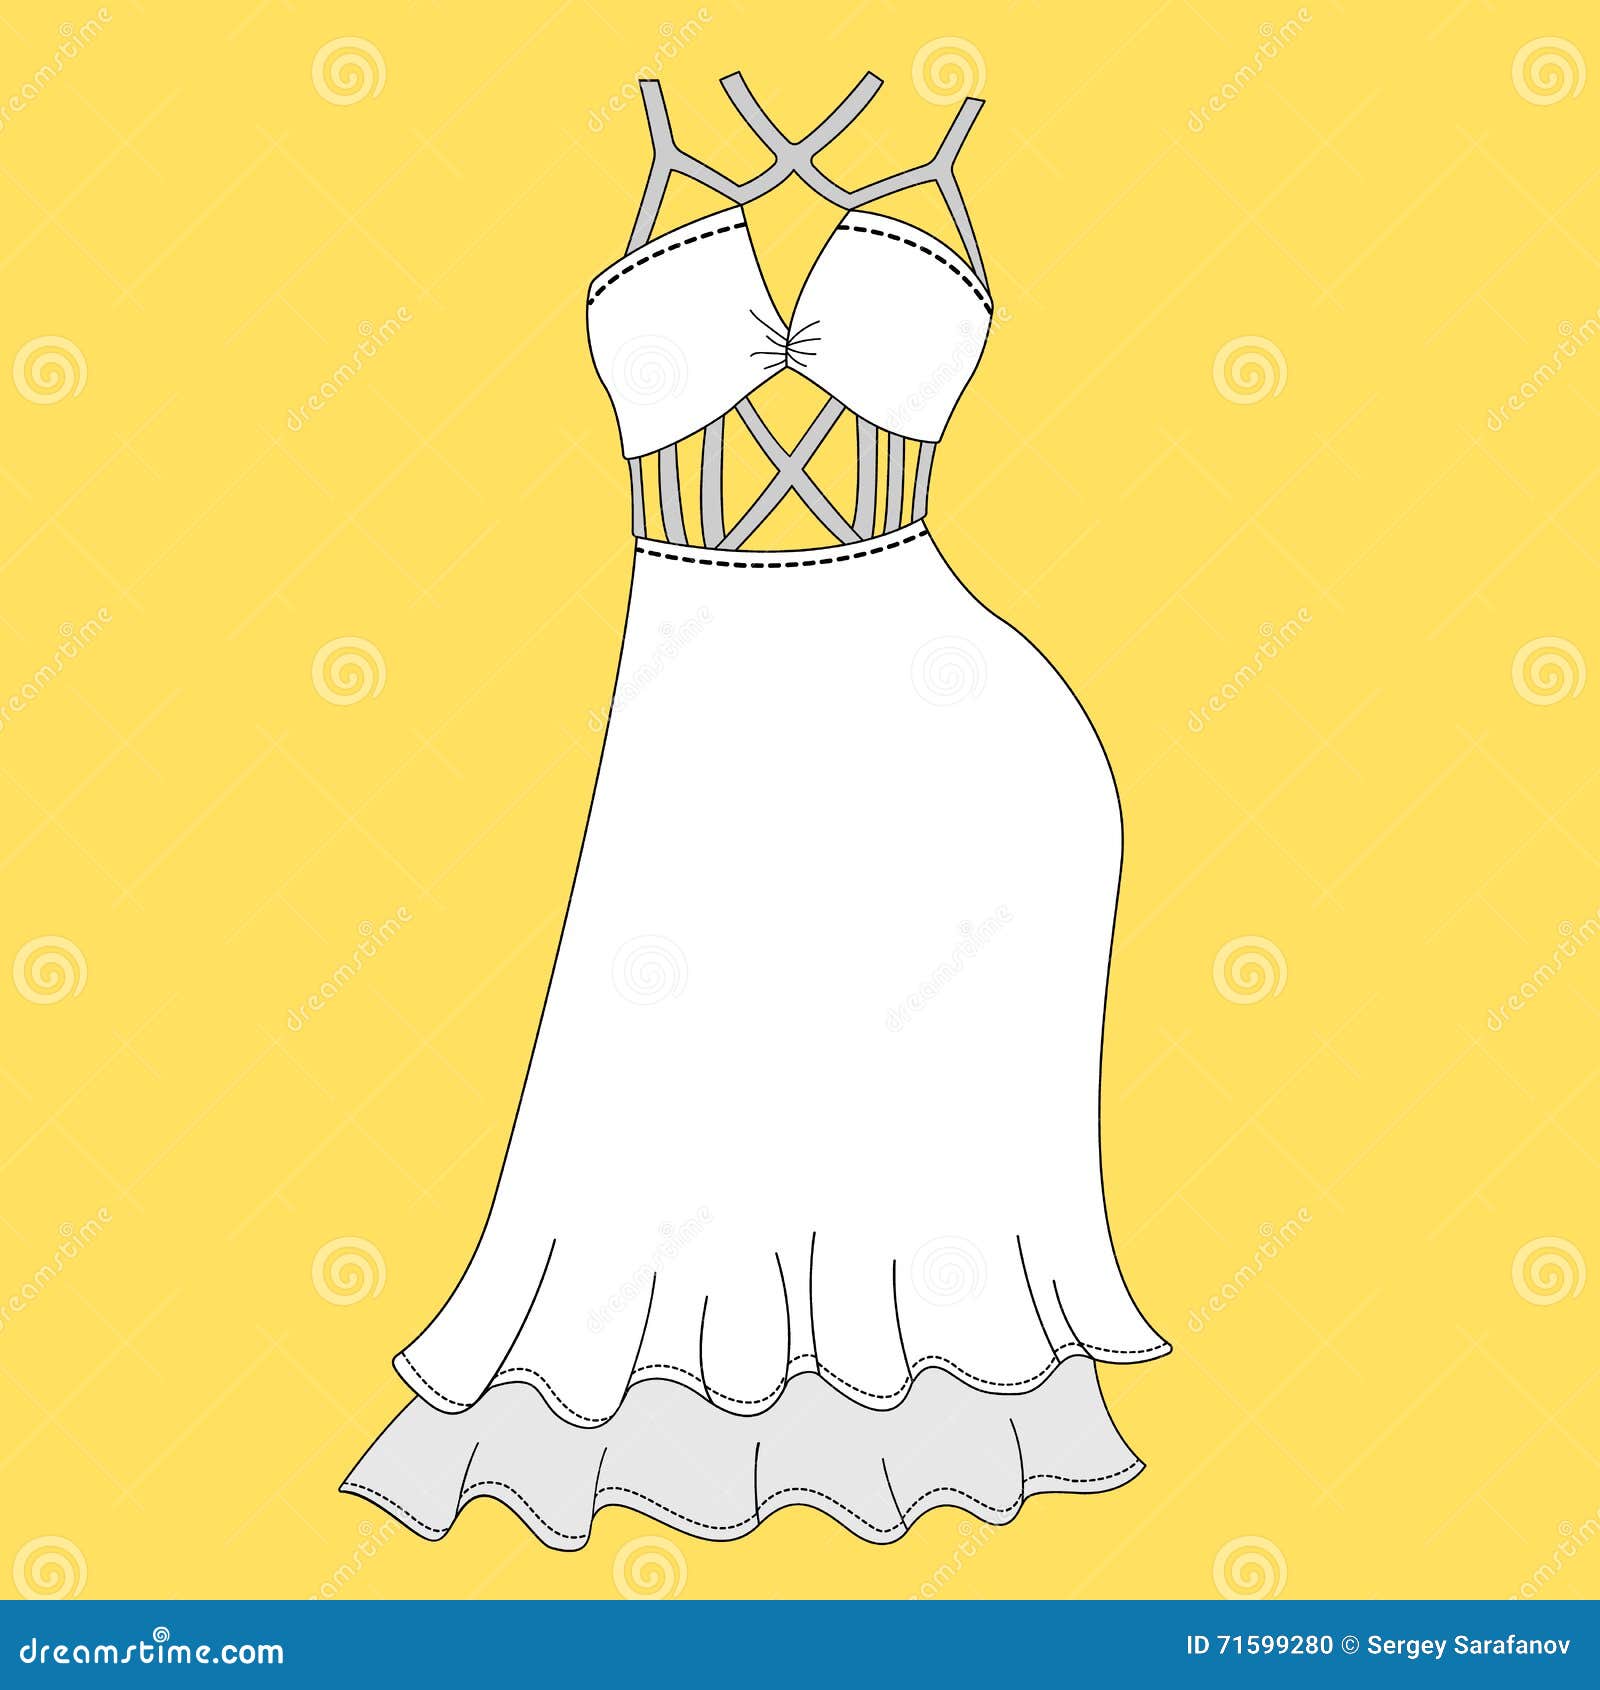 women dress design fashion flat templates sketches illustration 71599280